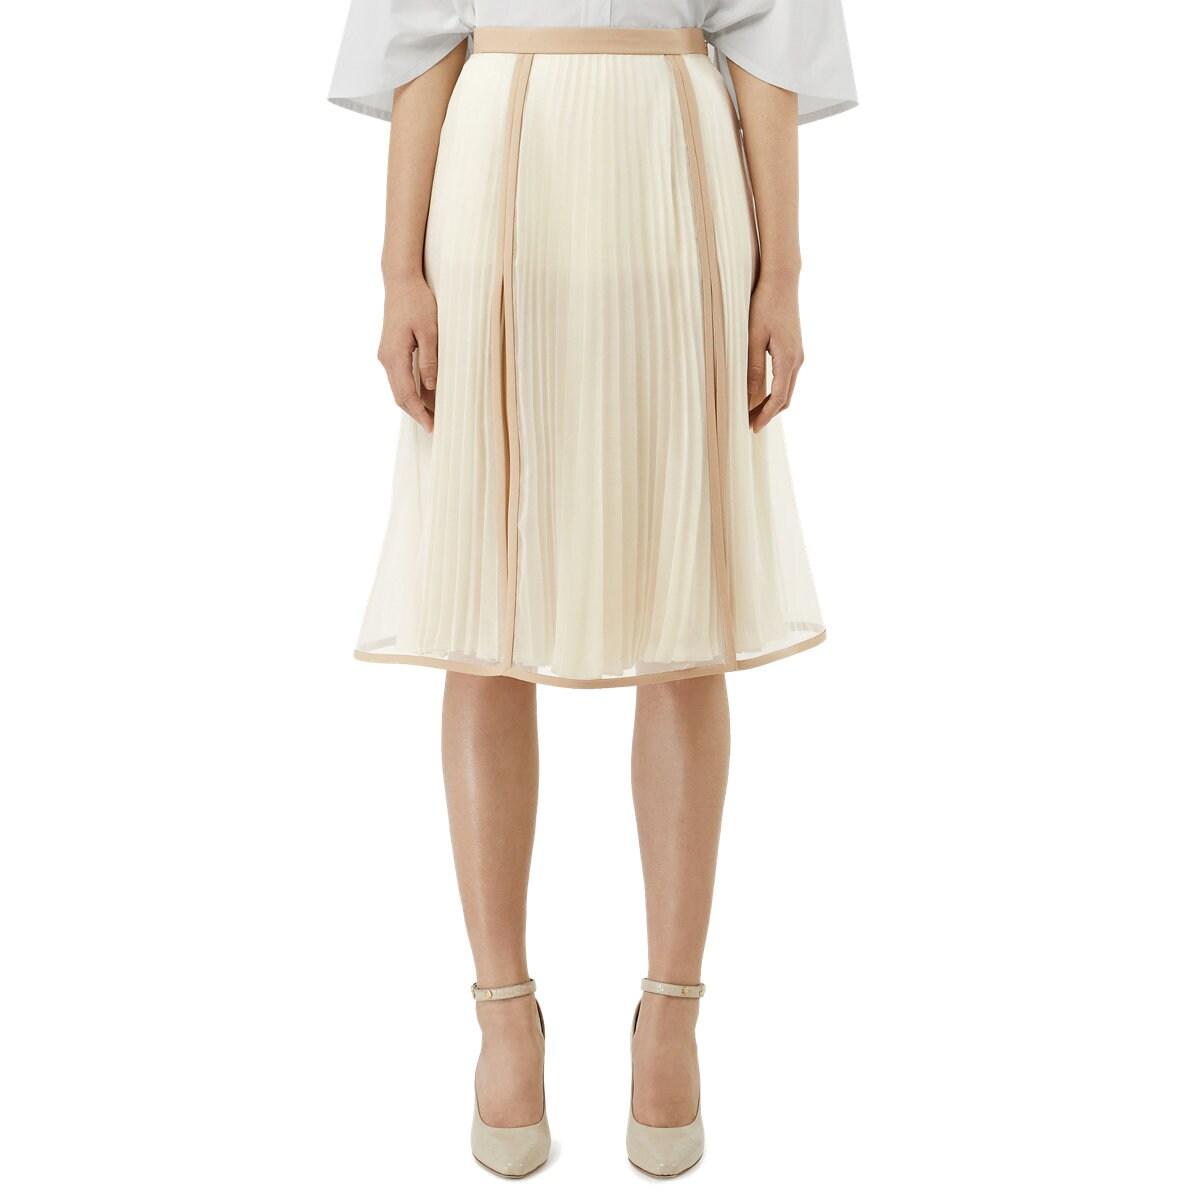 Burberry Silk Organza Layered Skirt in White - Lyst